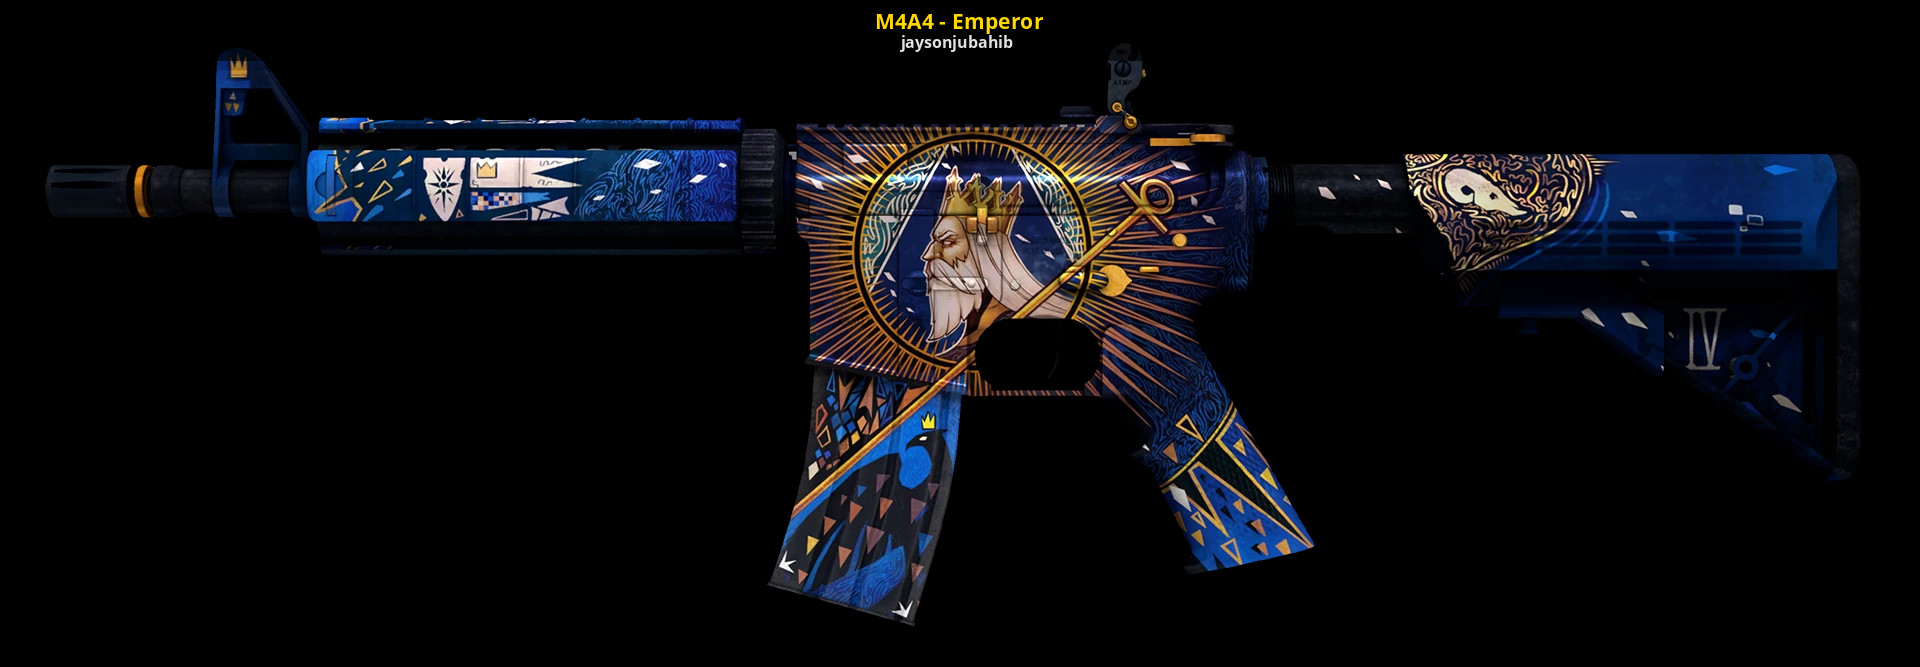 M4a4 император ft фото 3